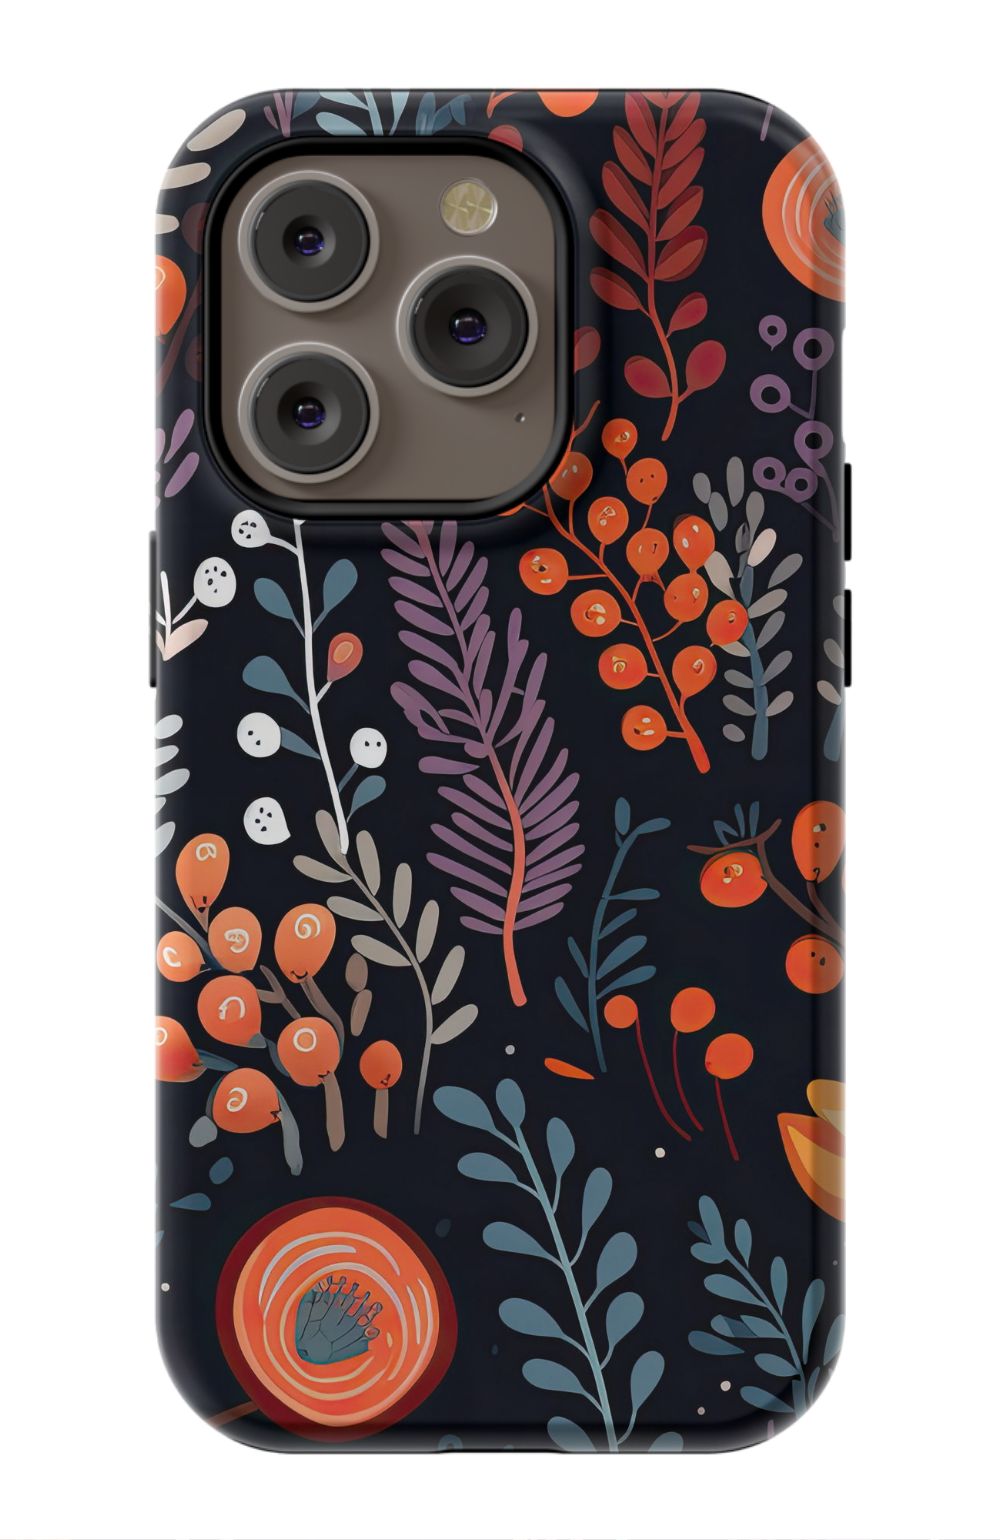 Boho Fall Cute Flowers iPhone case